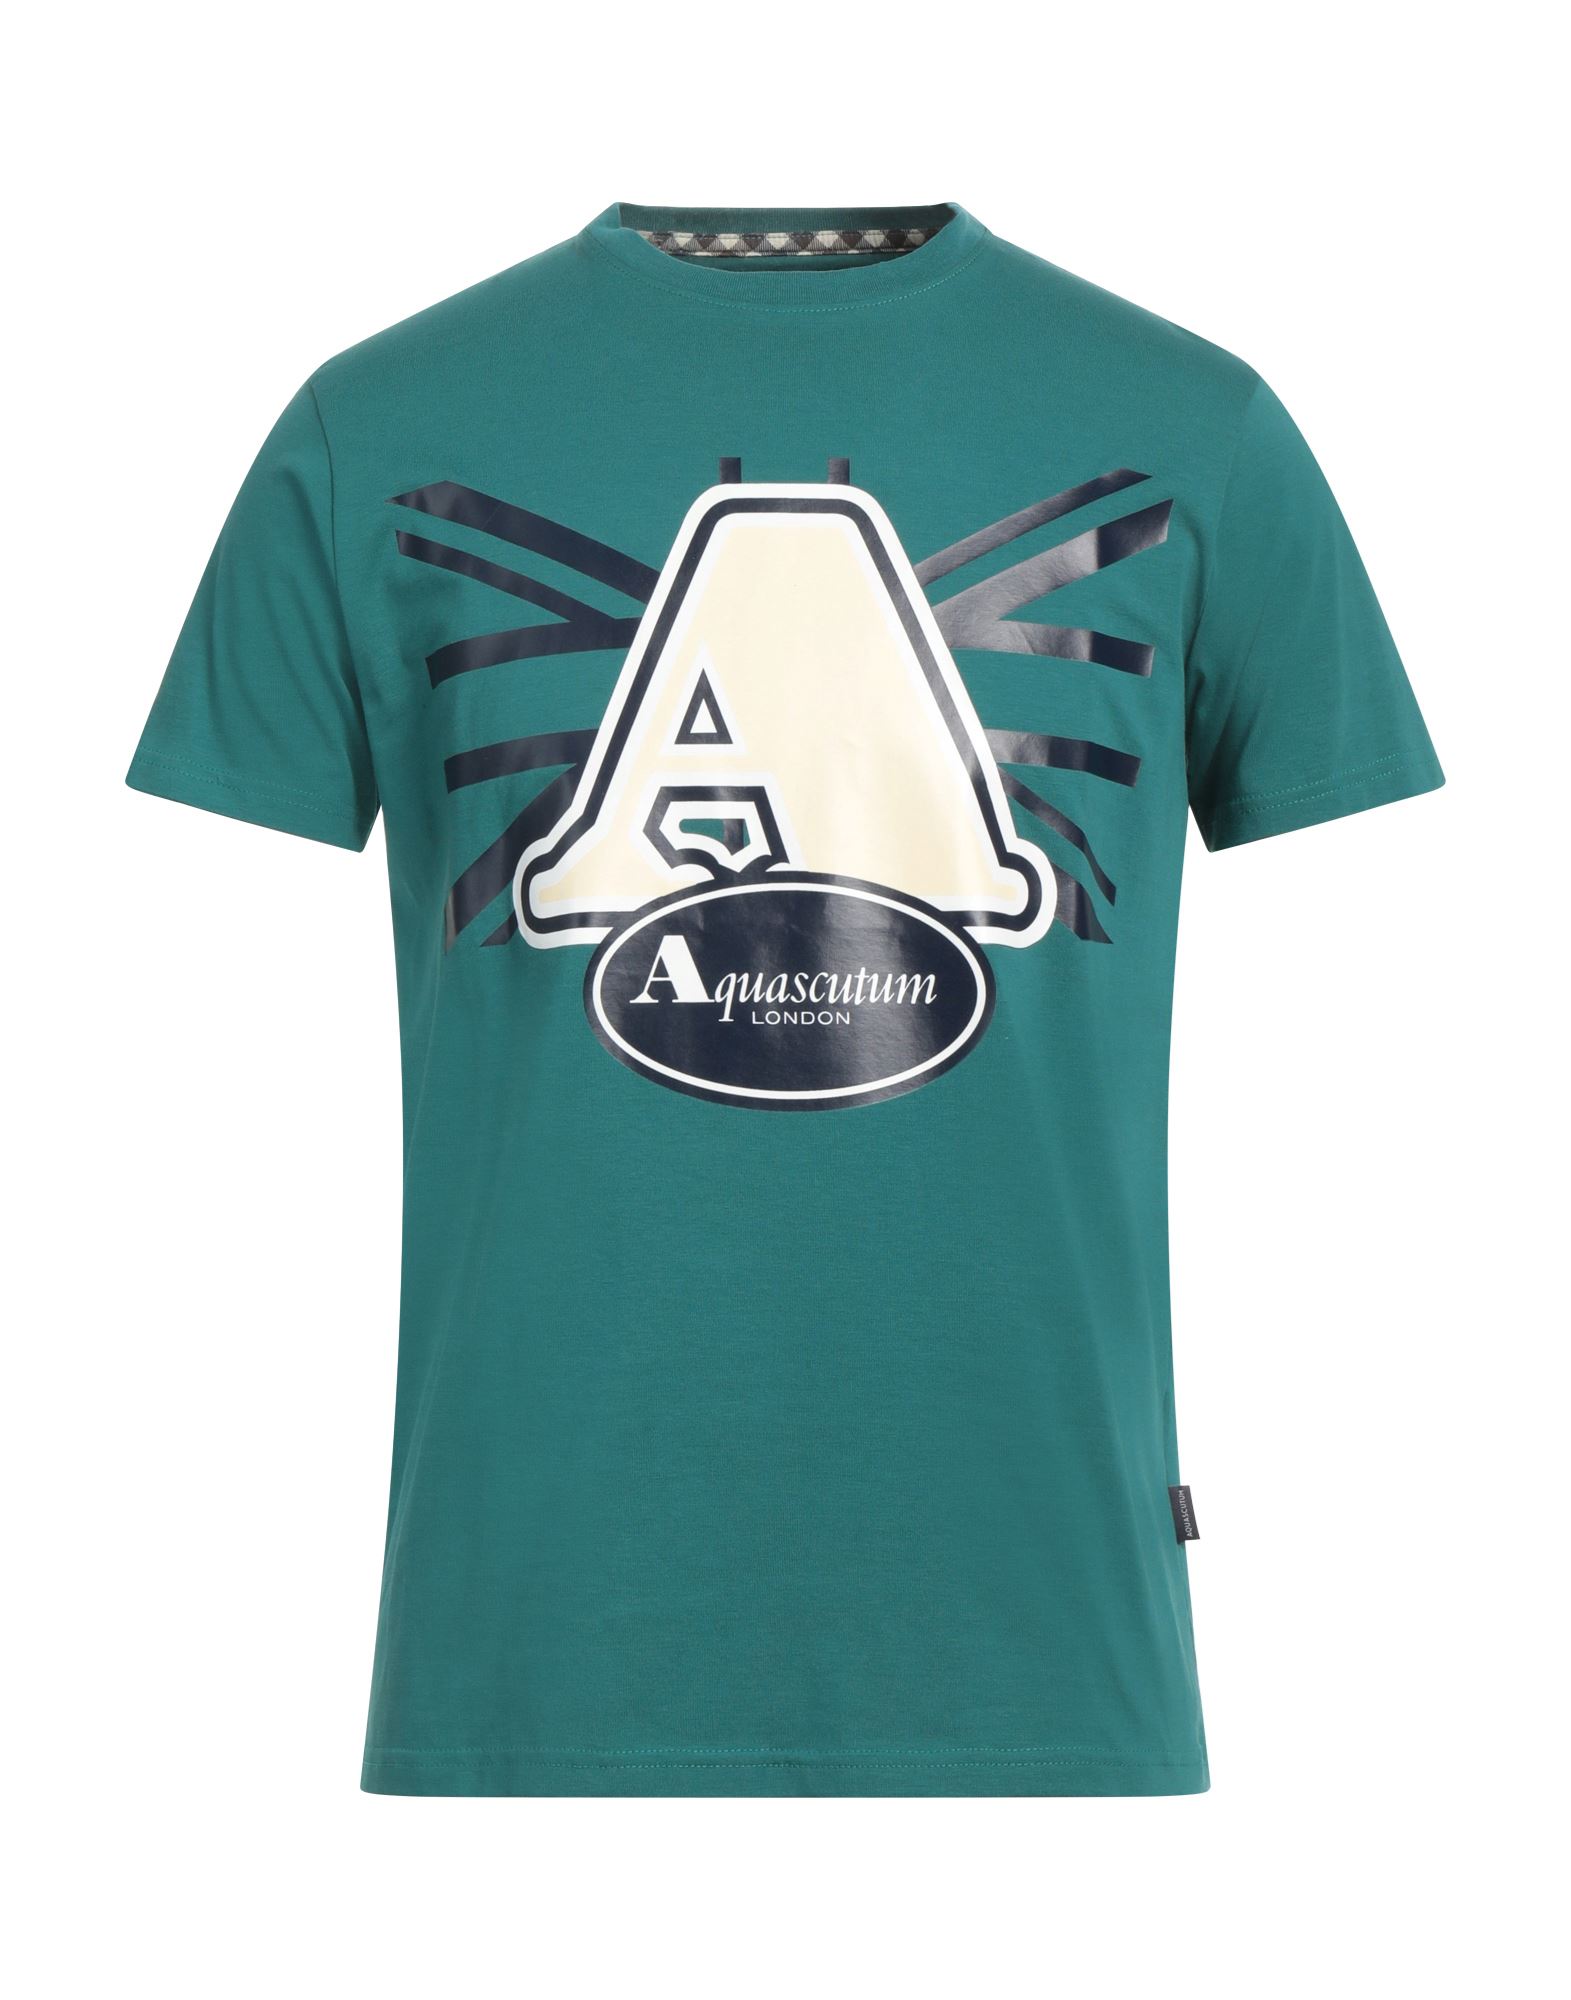 Aquascutum T-shirts In Green